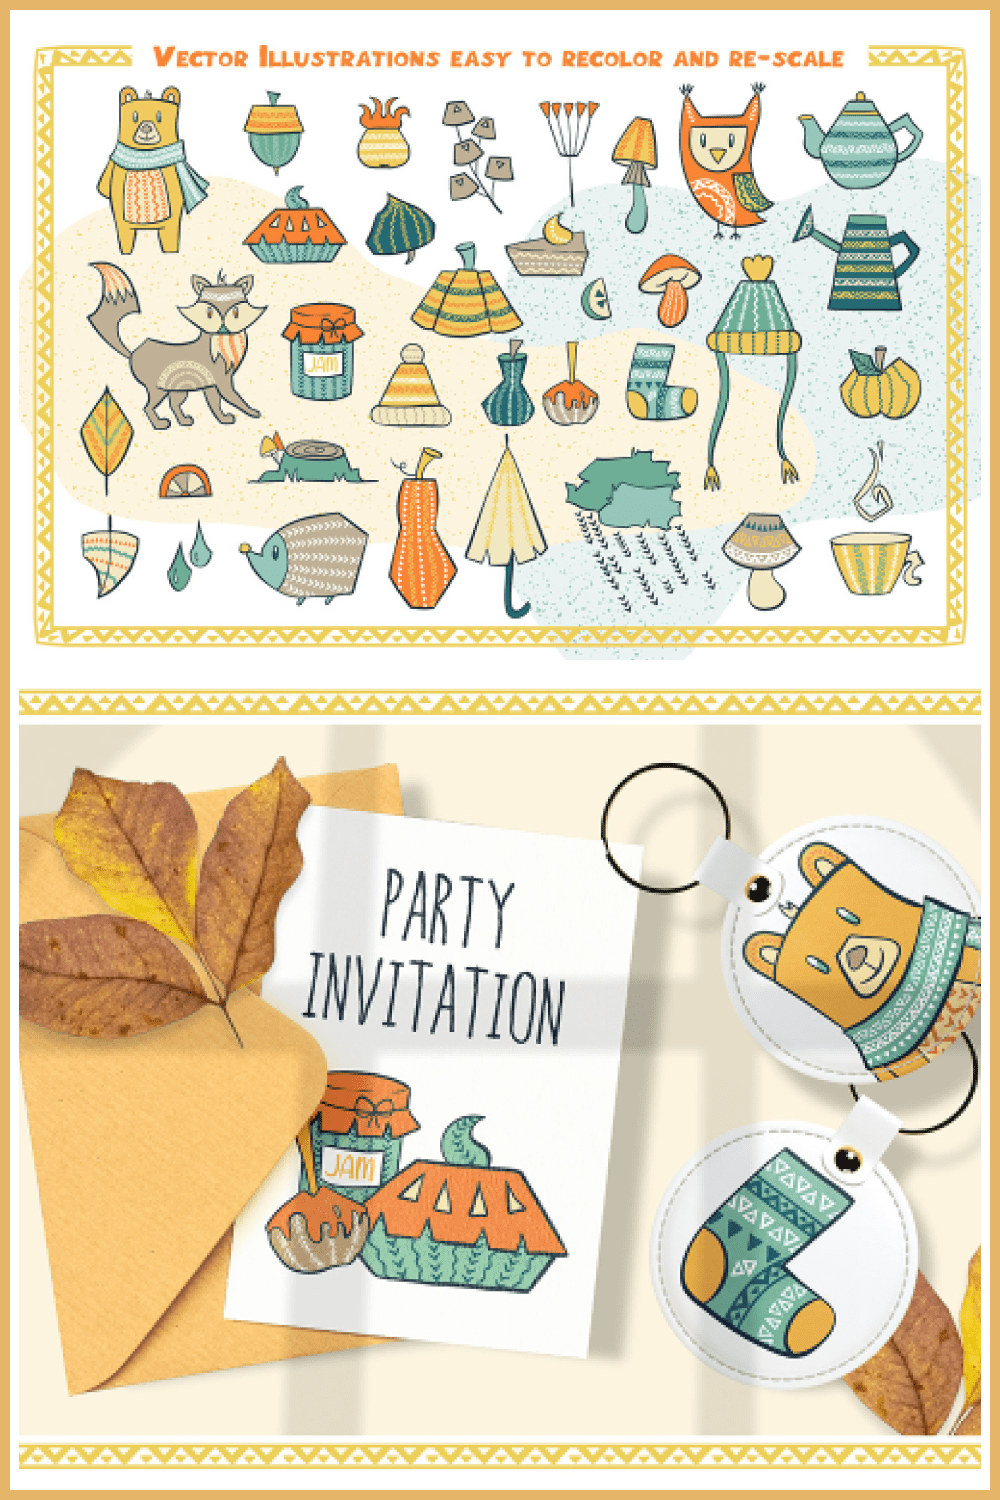 The Tale of Autumn Vector Illustrations - MasterBundles - Pinterest Collage Image.